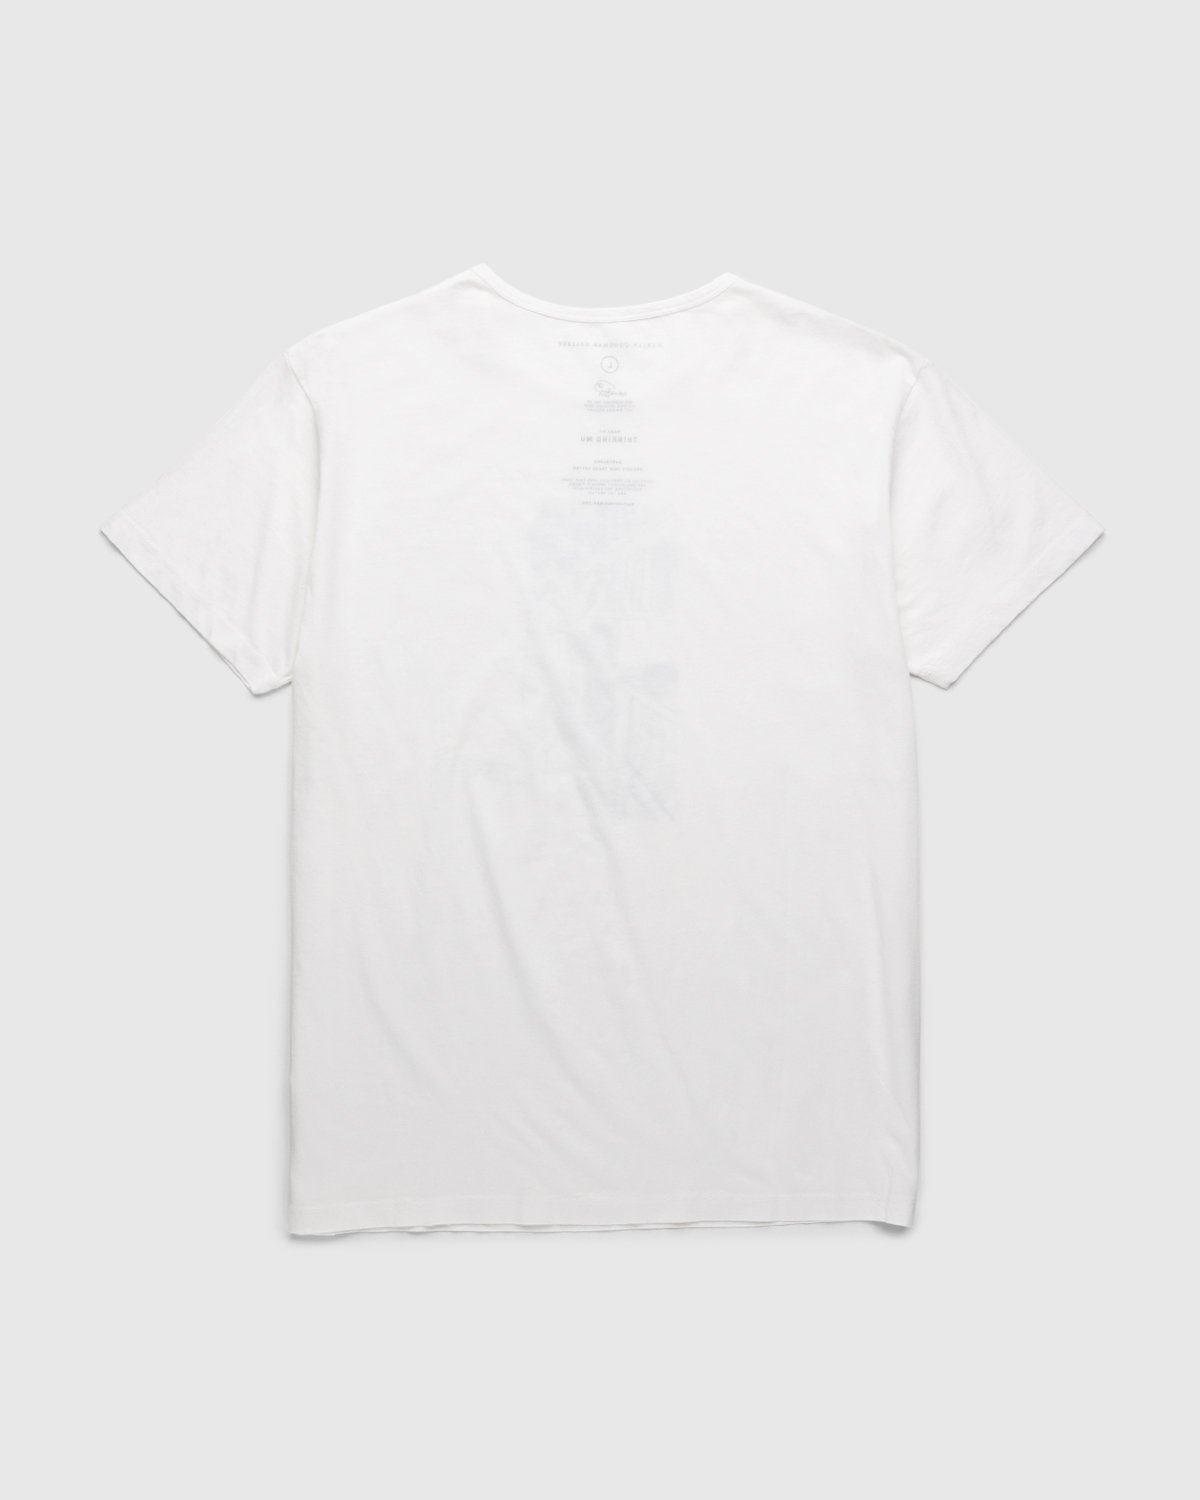 Mieko Meguro x Dan Graham - T-Shirt - Clothing - White - Image 2